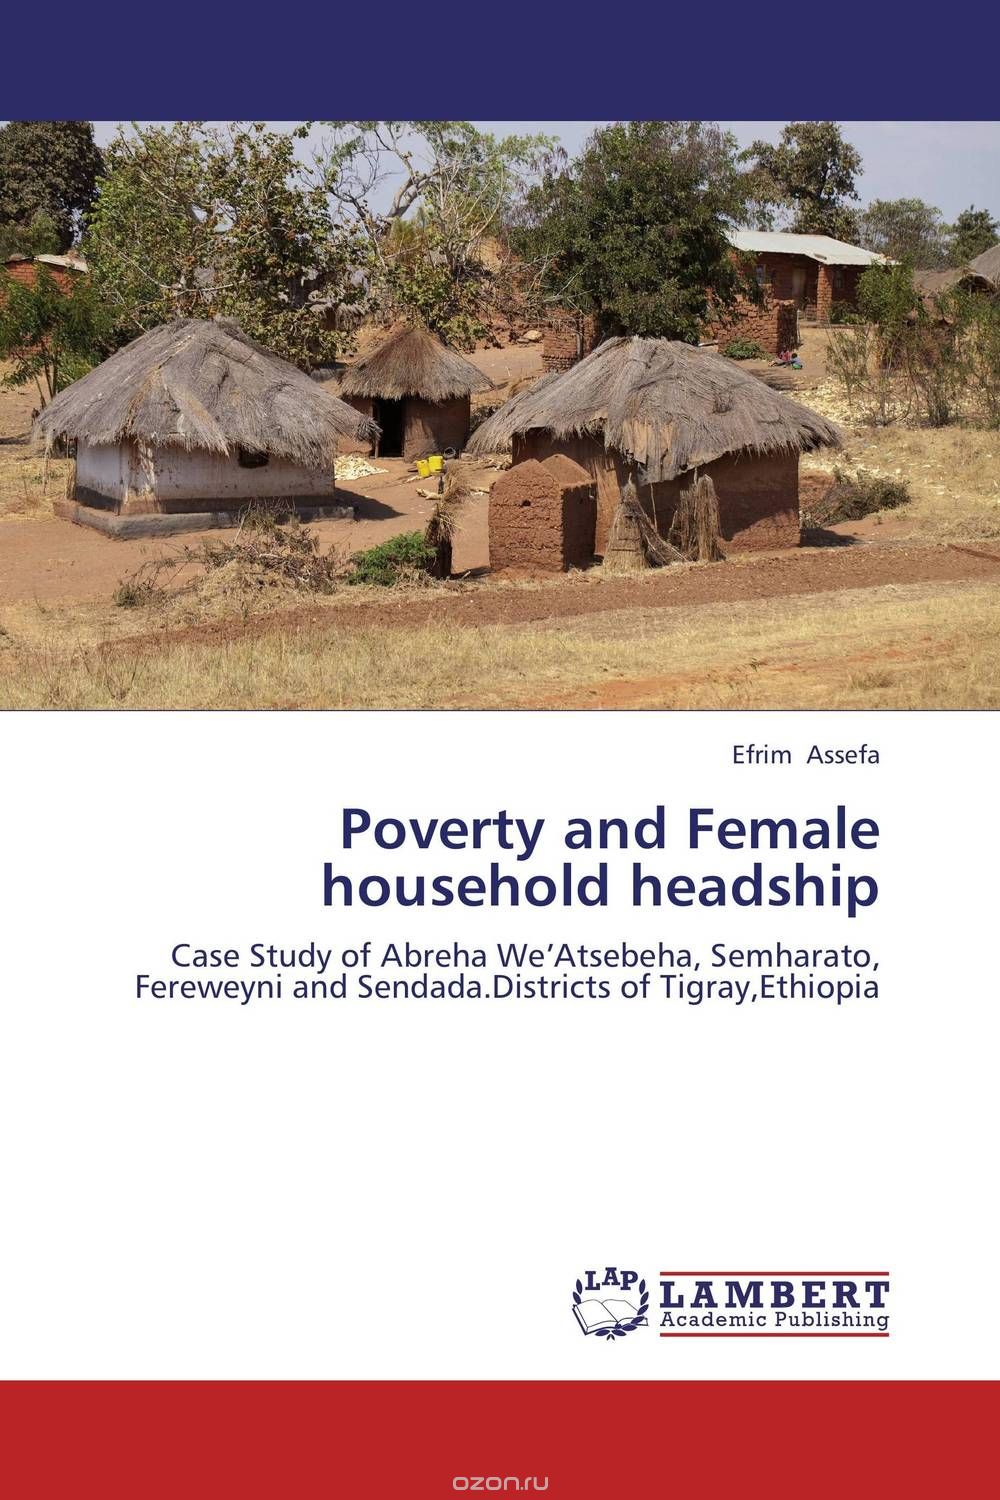 Скачать книгу "Poverty and Female household headship"